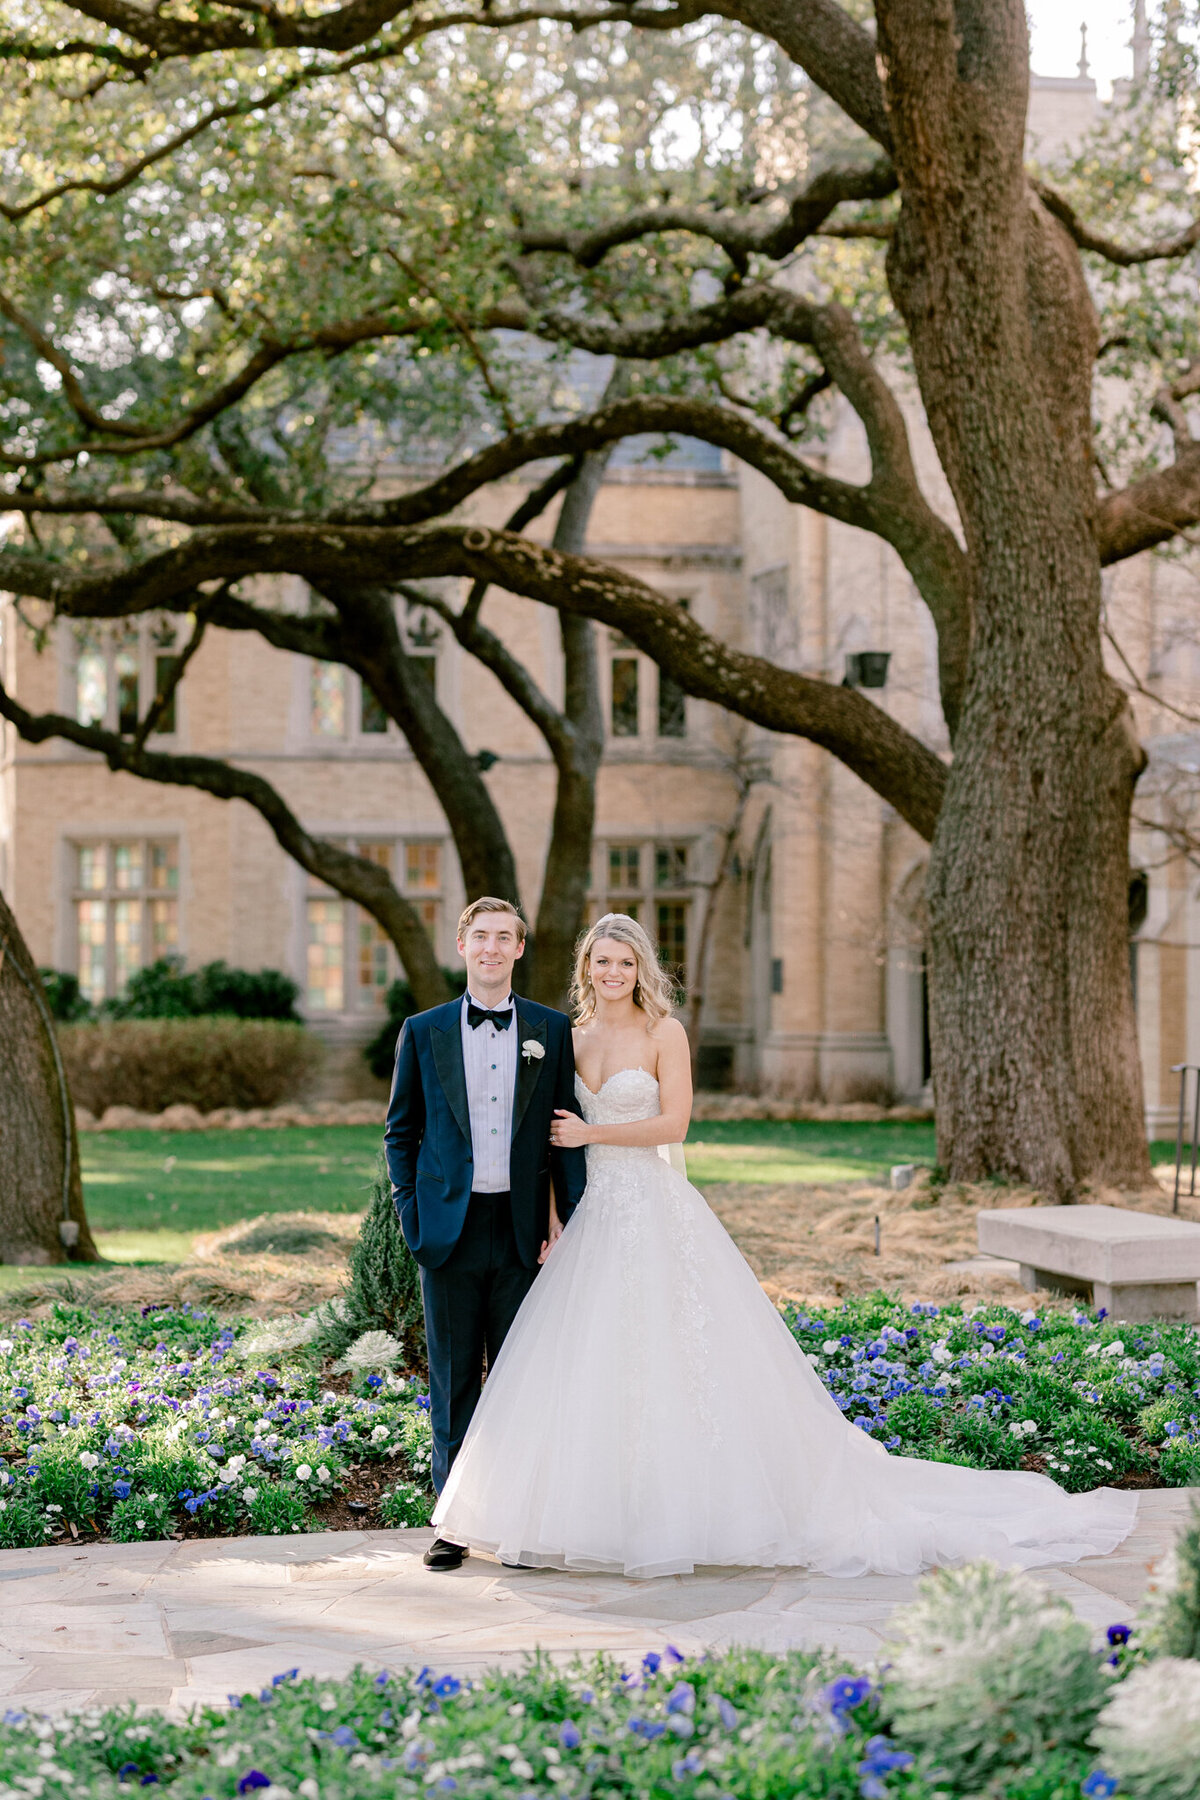 Shelby & Thomas's Wedding at HPUMC The Room on Main | Dallas Wedding Photographer | Sami Kathryn Photography-159